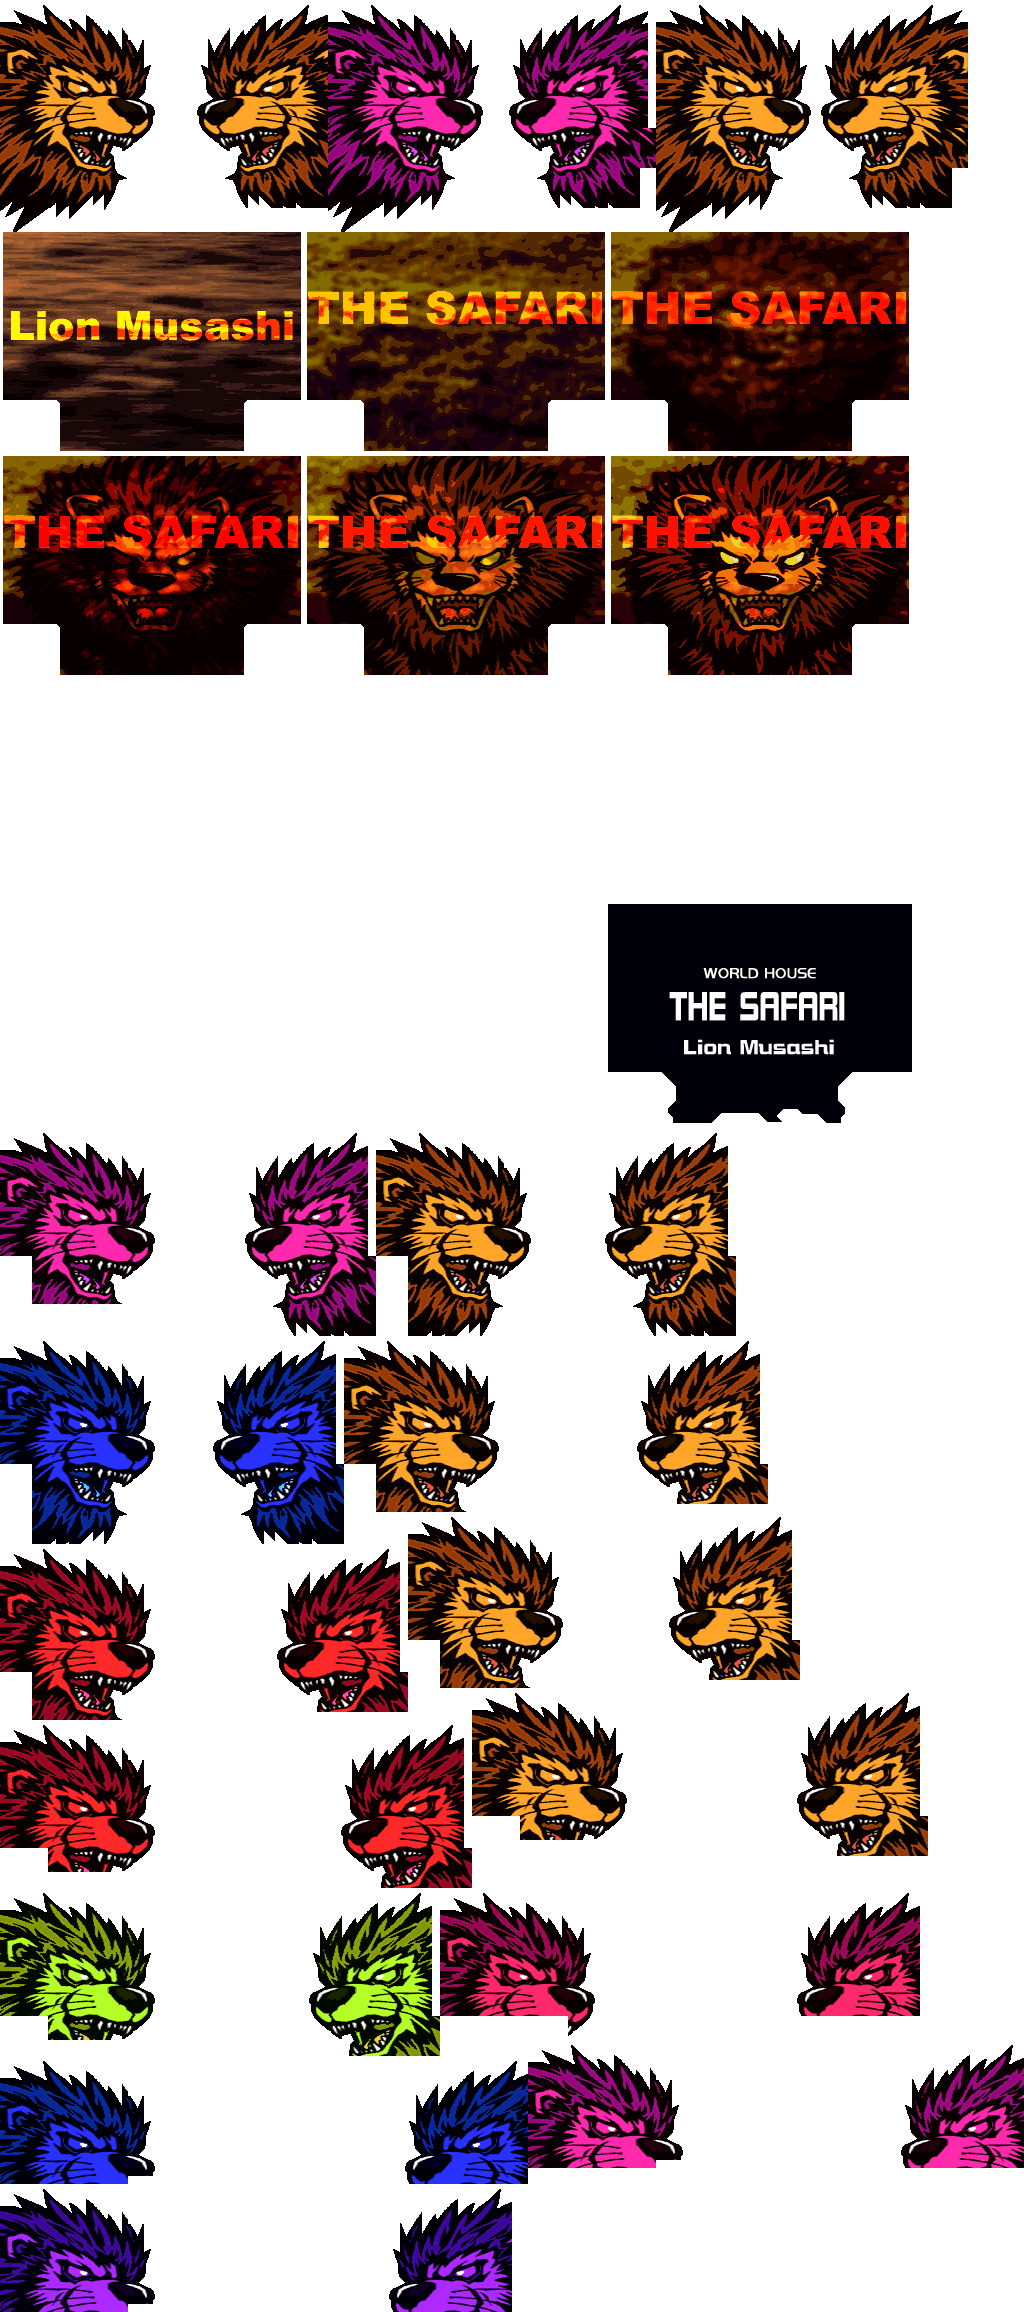 beatmania IIDX Series - The Safari